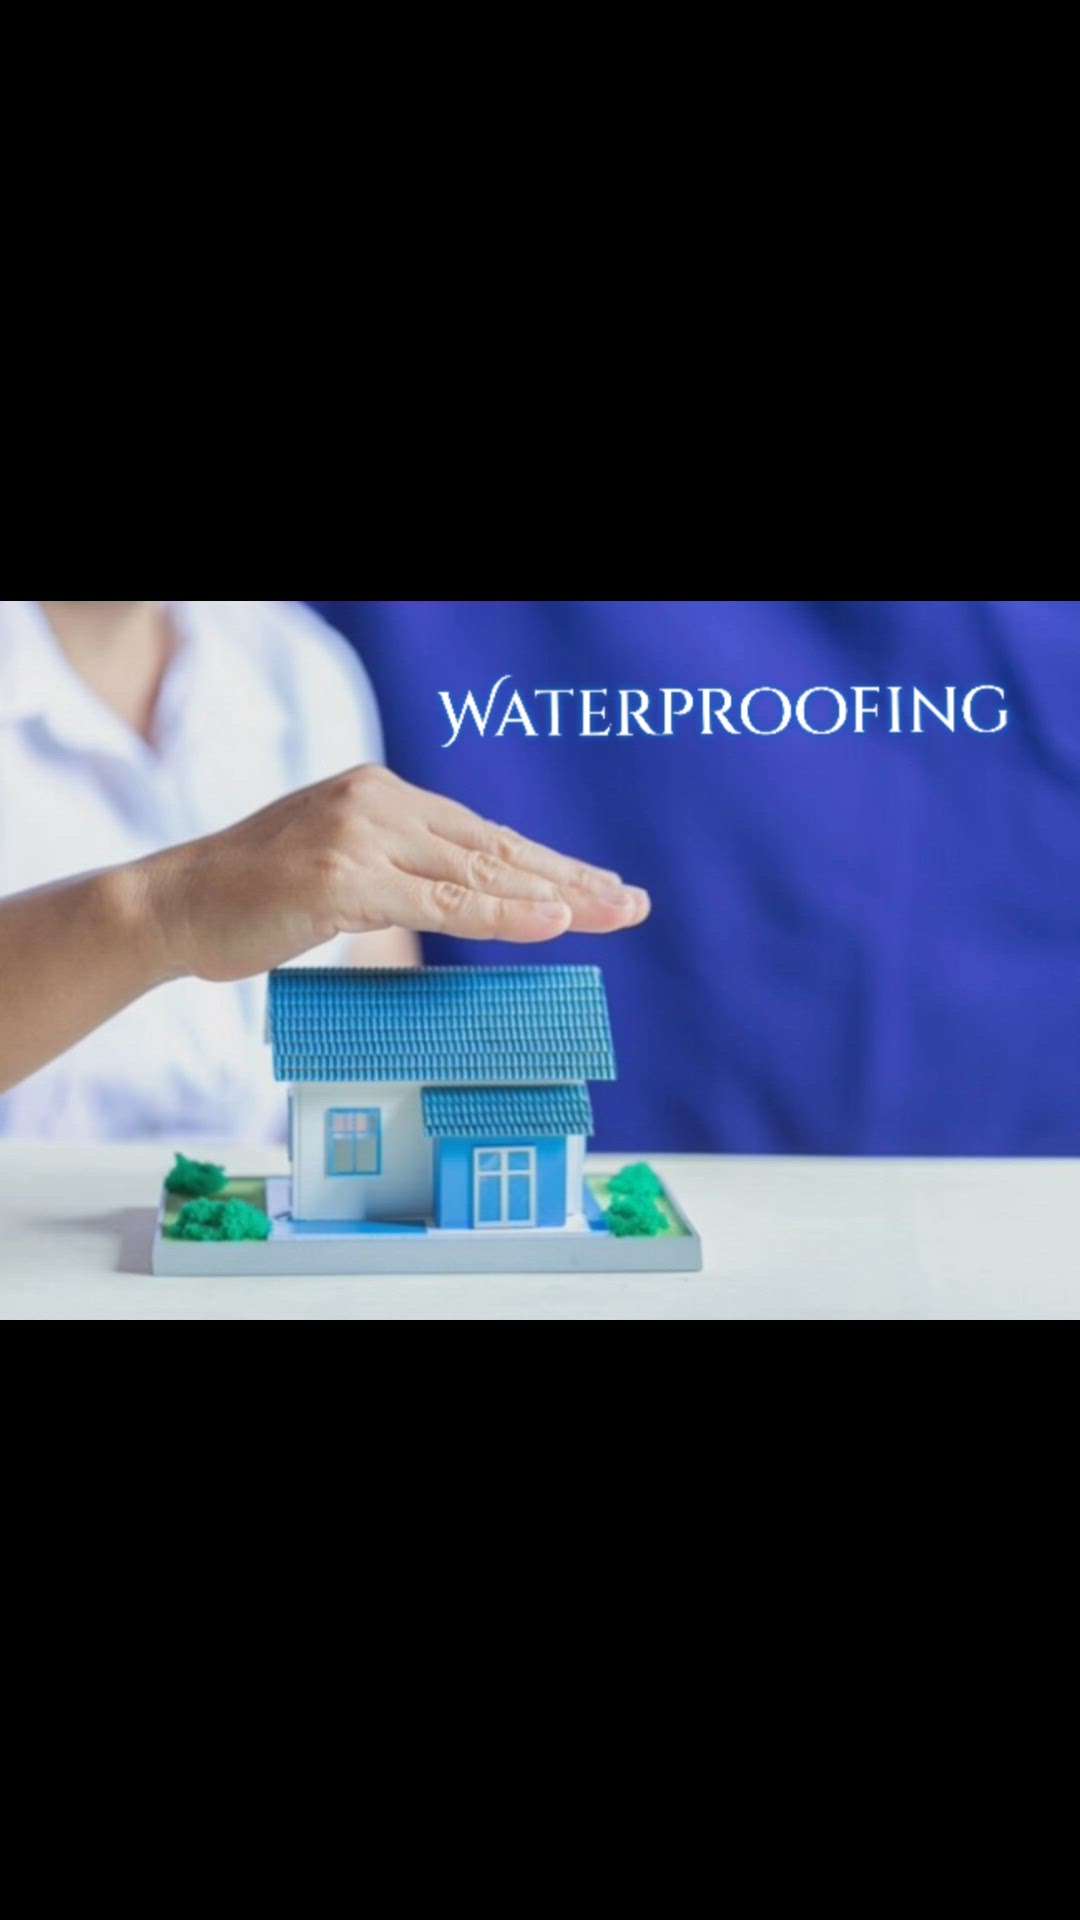 waterproofing 


#creatorsofkolo #waterproof #waterproofing #waterproofyourhome #diywaterproof #howtowaterproof #leakproof #leakprevention #homeimprovement